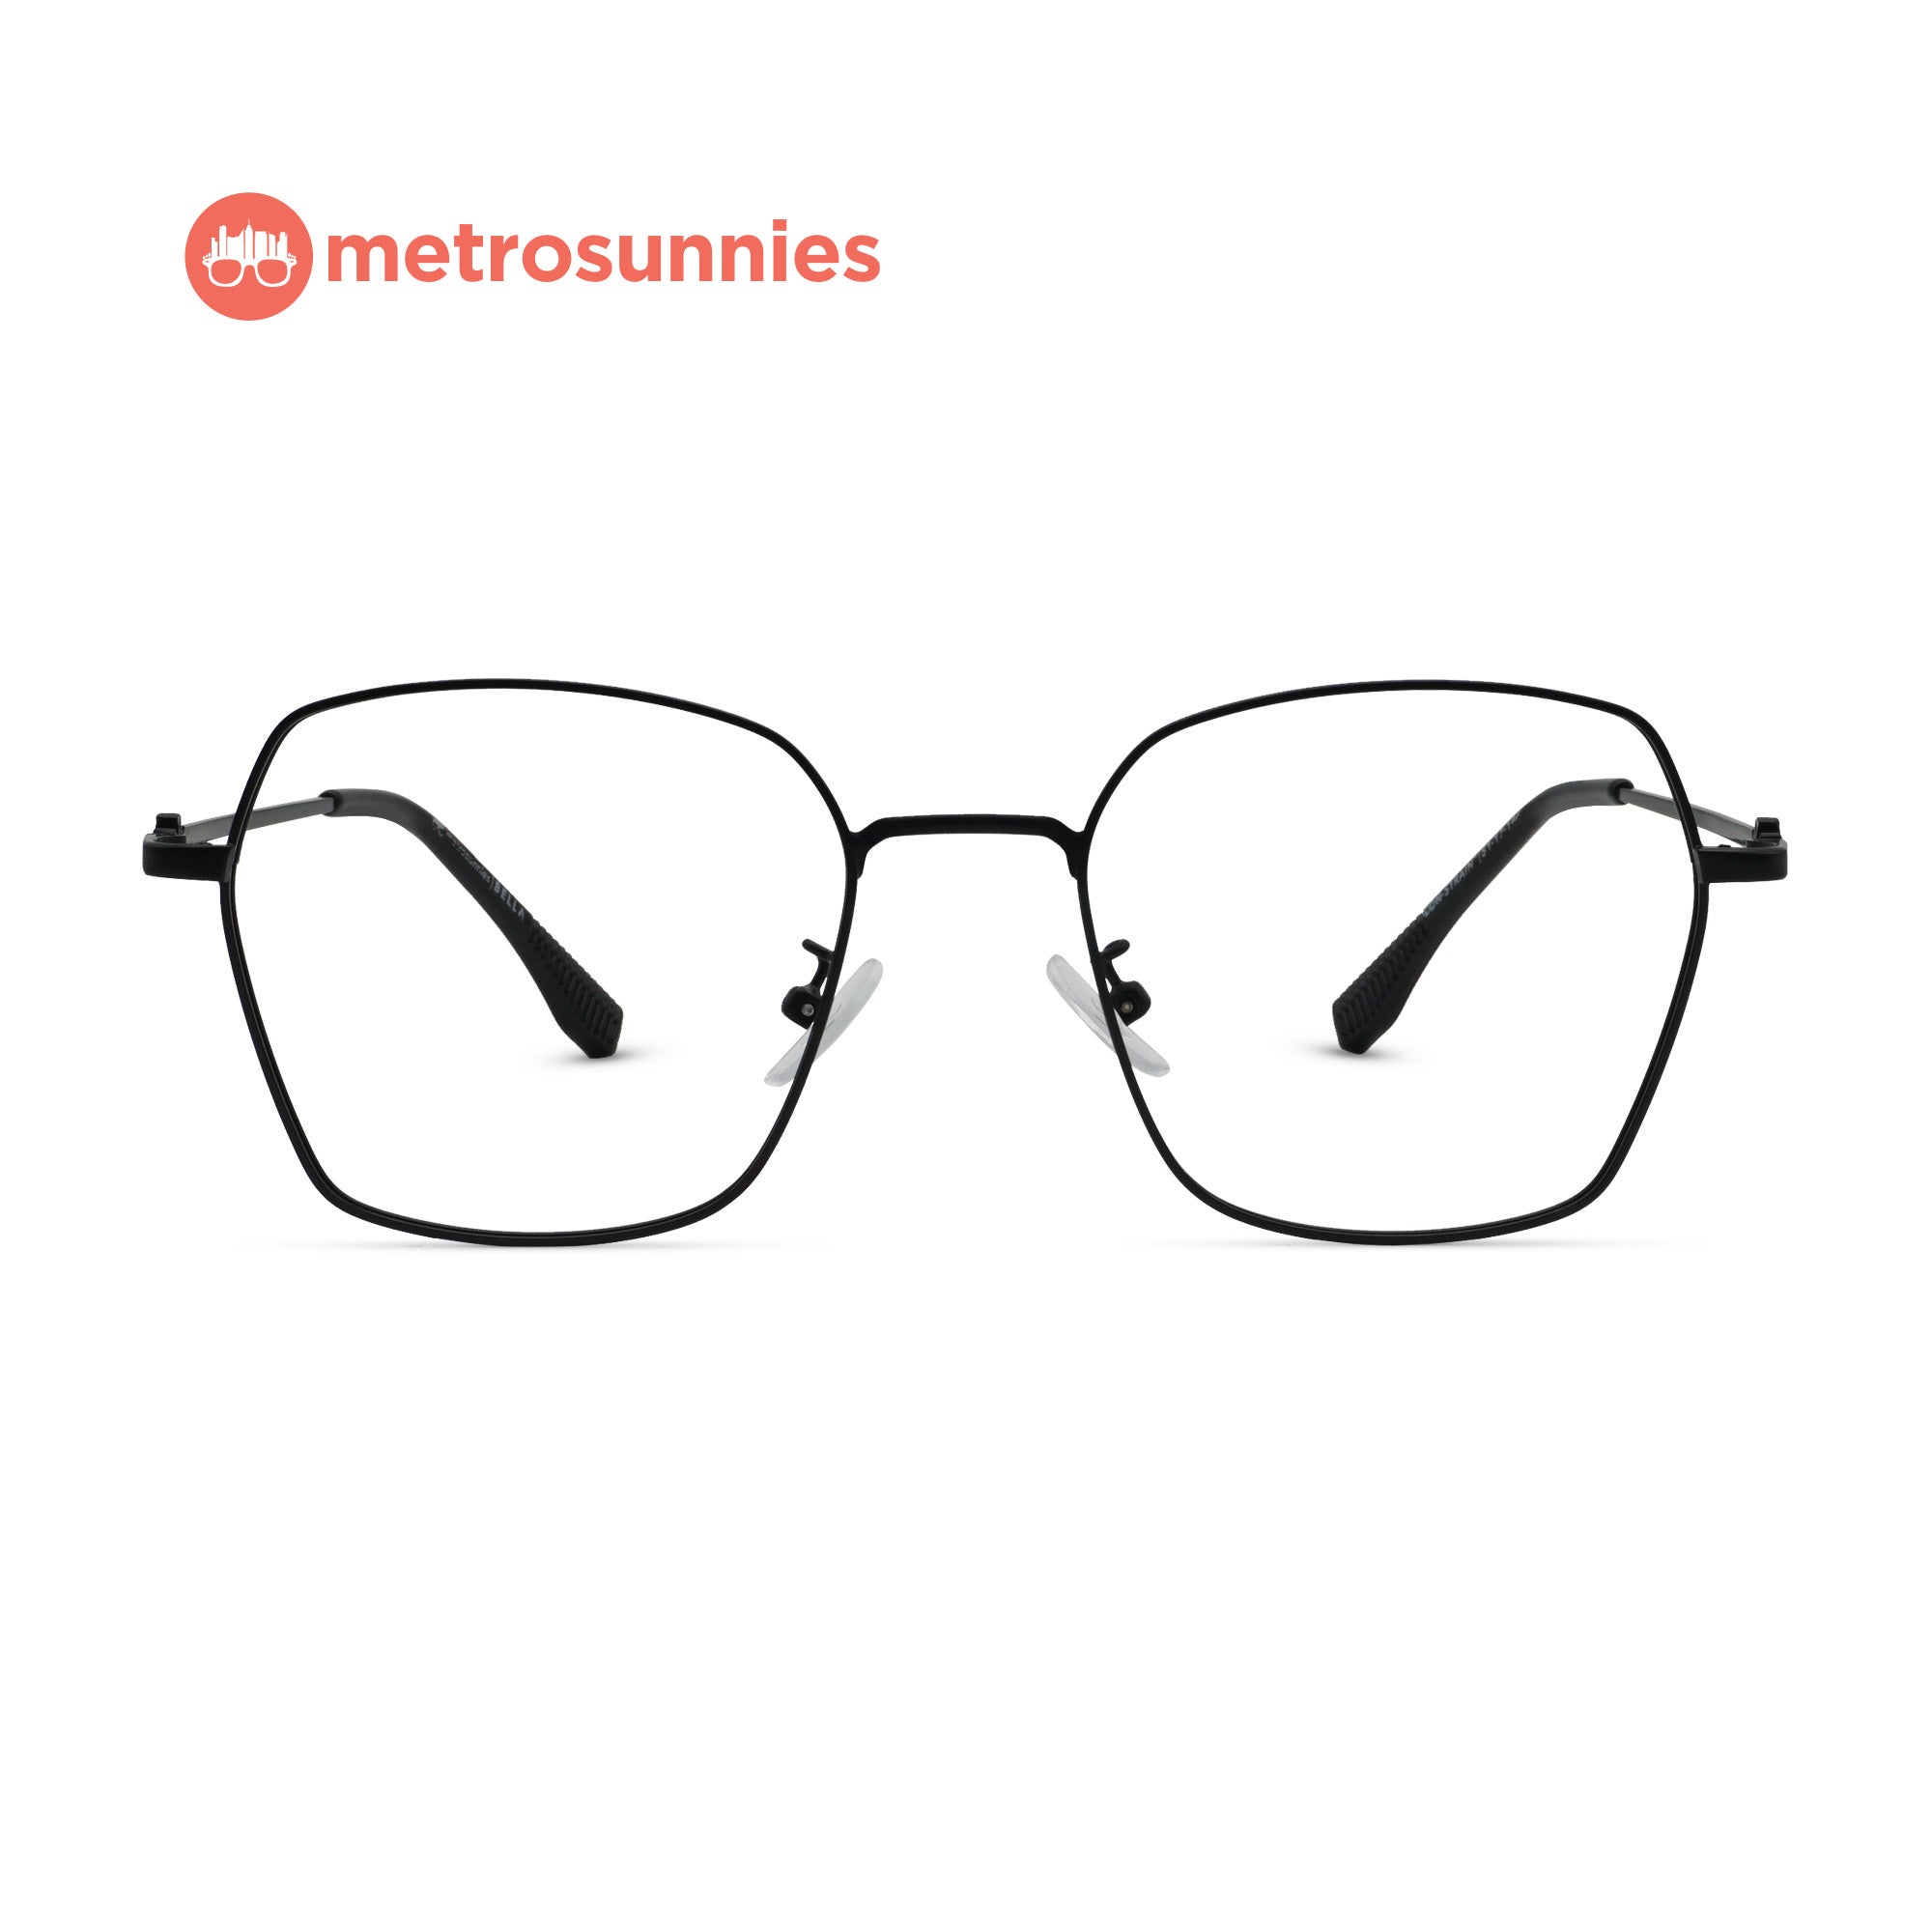 MetroSunnies Bella Specs (Black) / Con-Strain Blue Light / Anti-Radiation Computer Eyeglasses